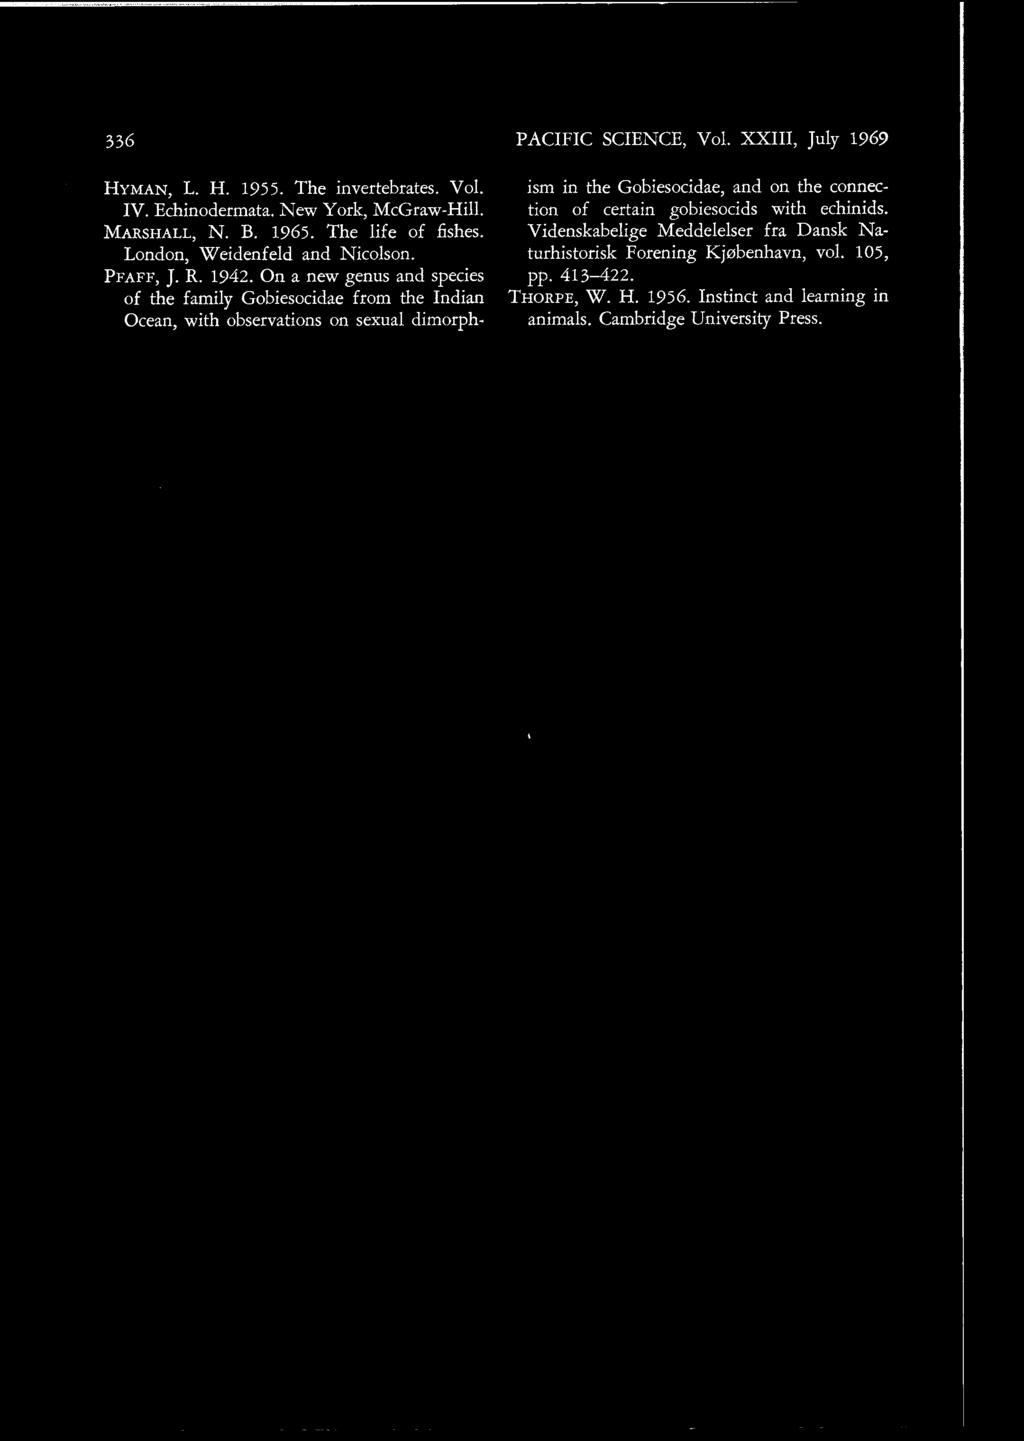 336 HYMAN, L. H. 1955. The invertebrates. Vol. IV. Echinodeqnata. New York, McGraw-Hill. MARSHALL, N. B. 1965. The life of fishes. London, Weidenfe1d and Nicolson. PFAFF, J. R. 1942.